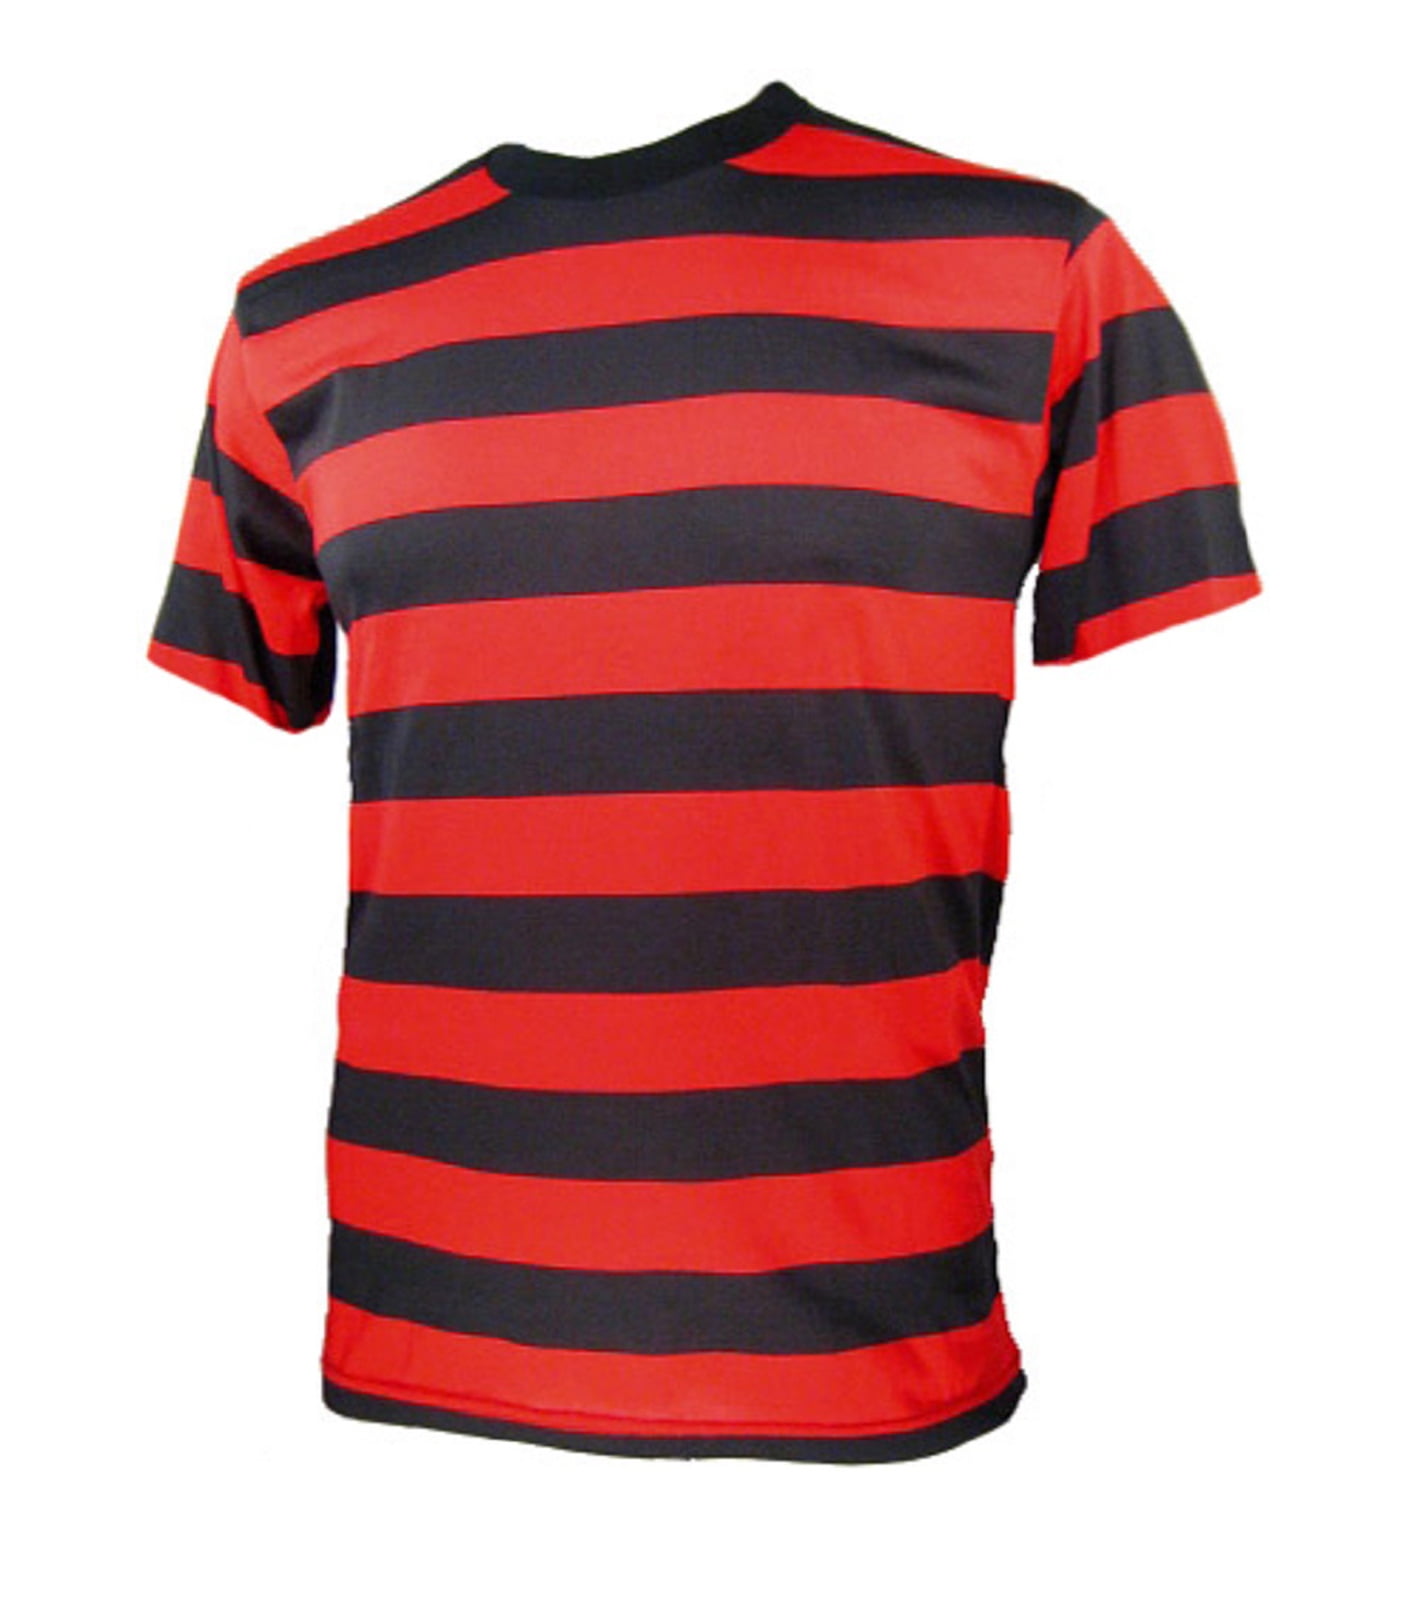 Short Sleeve Striped Shirt Men's Red Black - Walmart.com